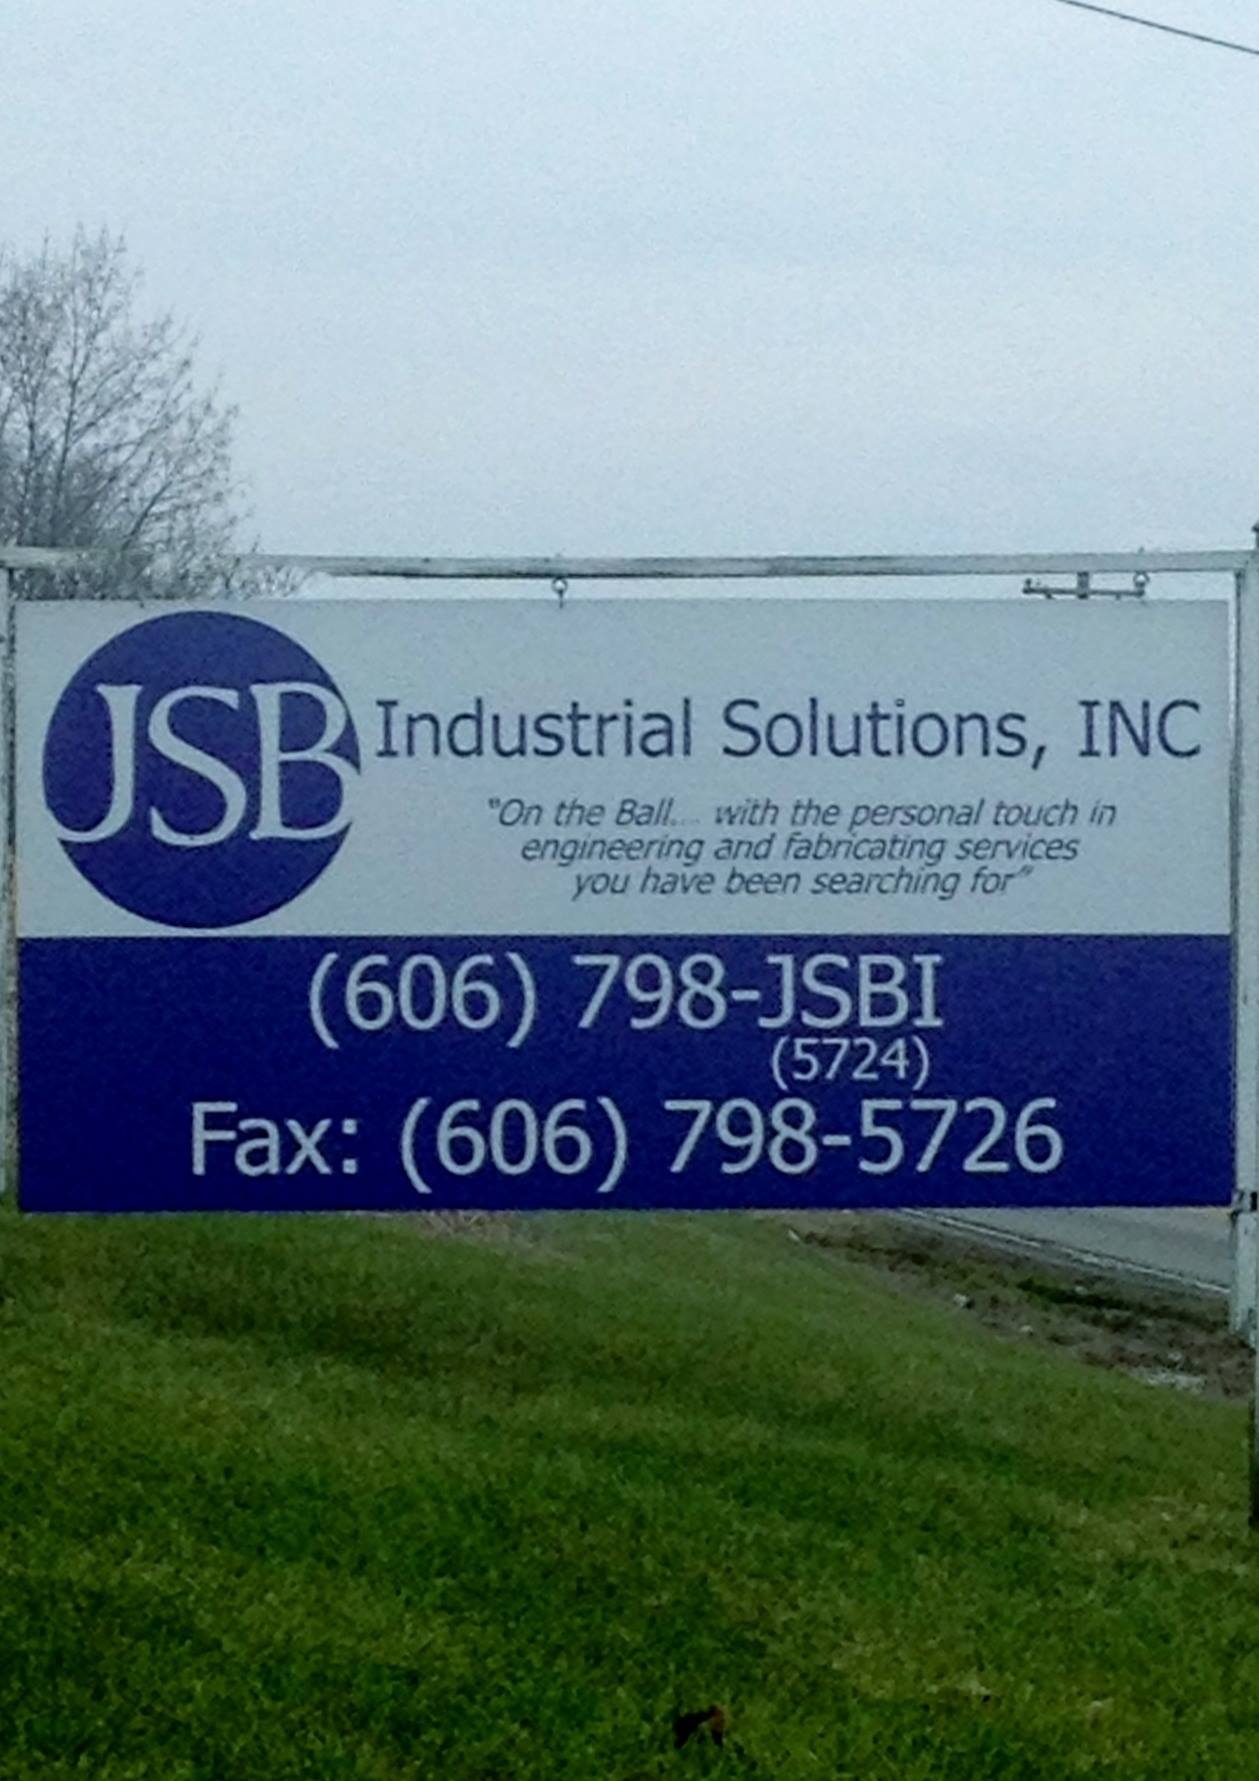 JSB Industrial Solutions